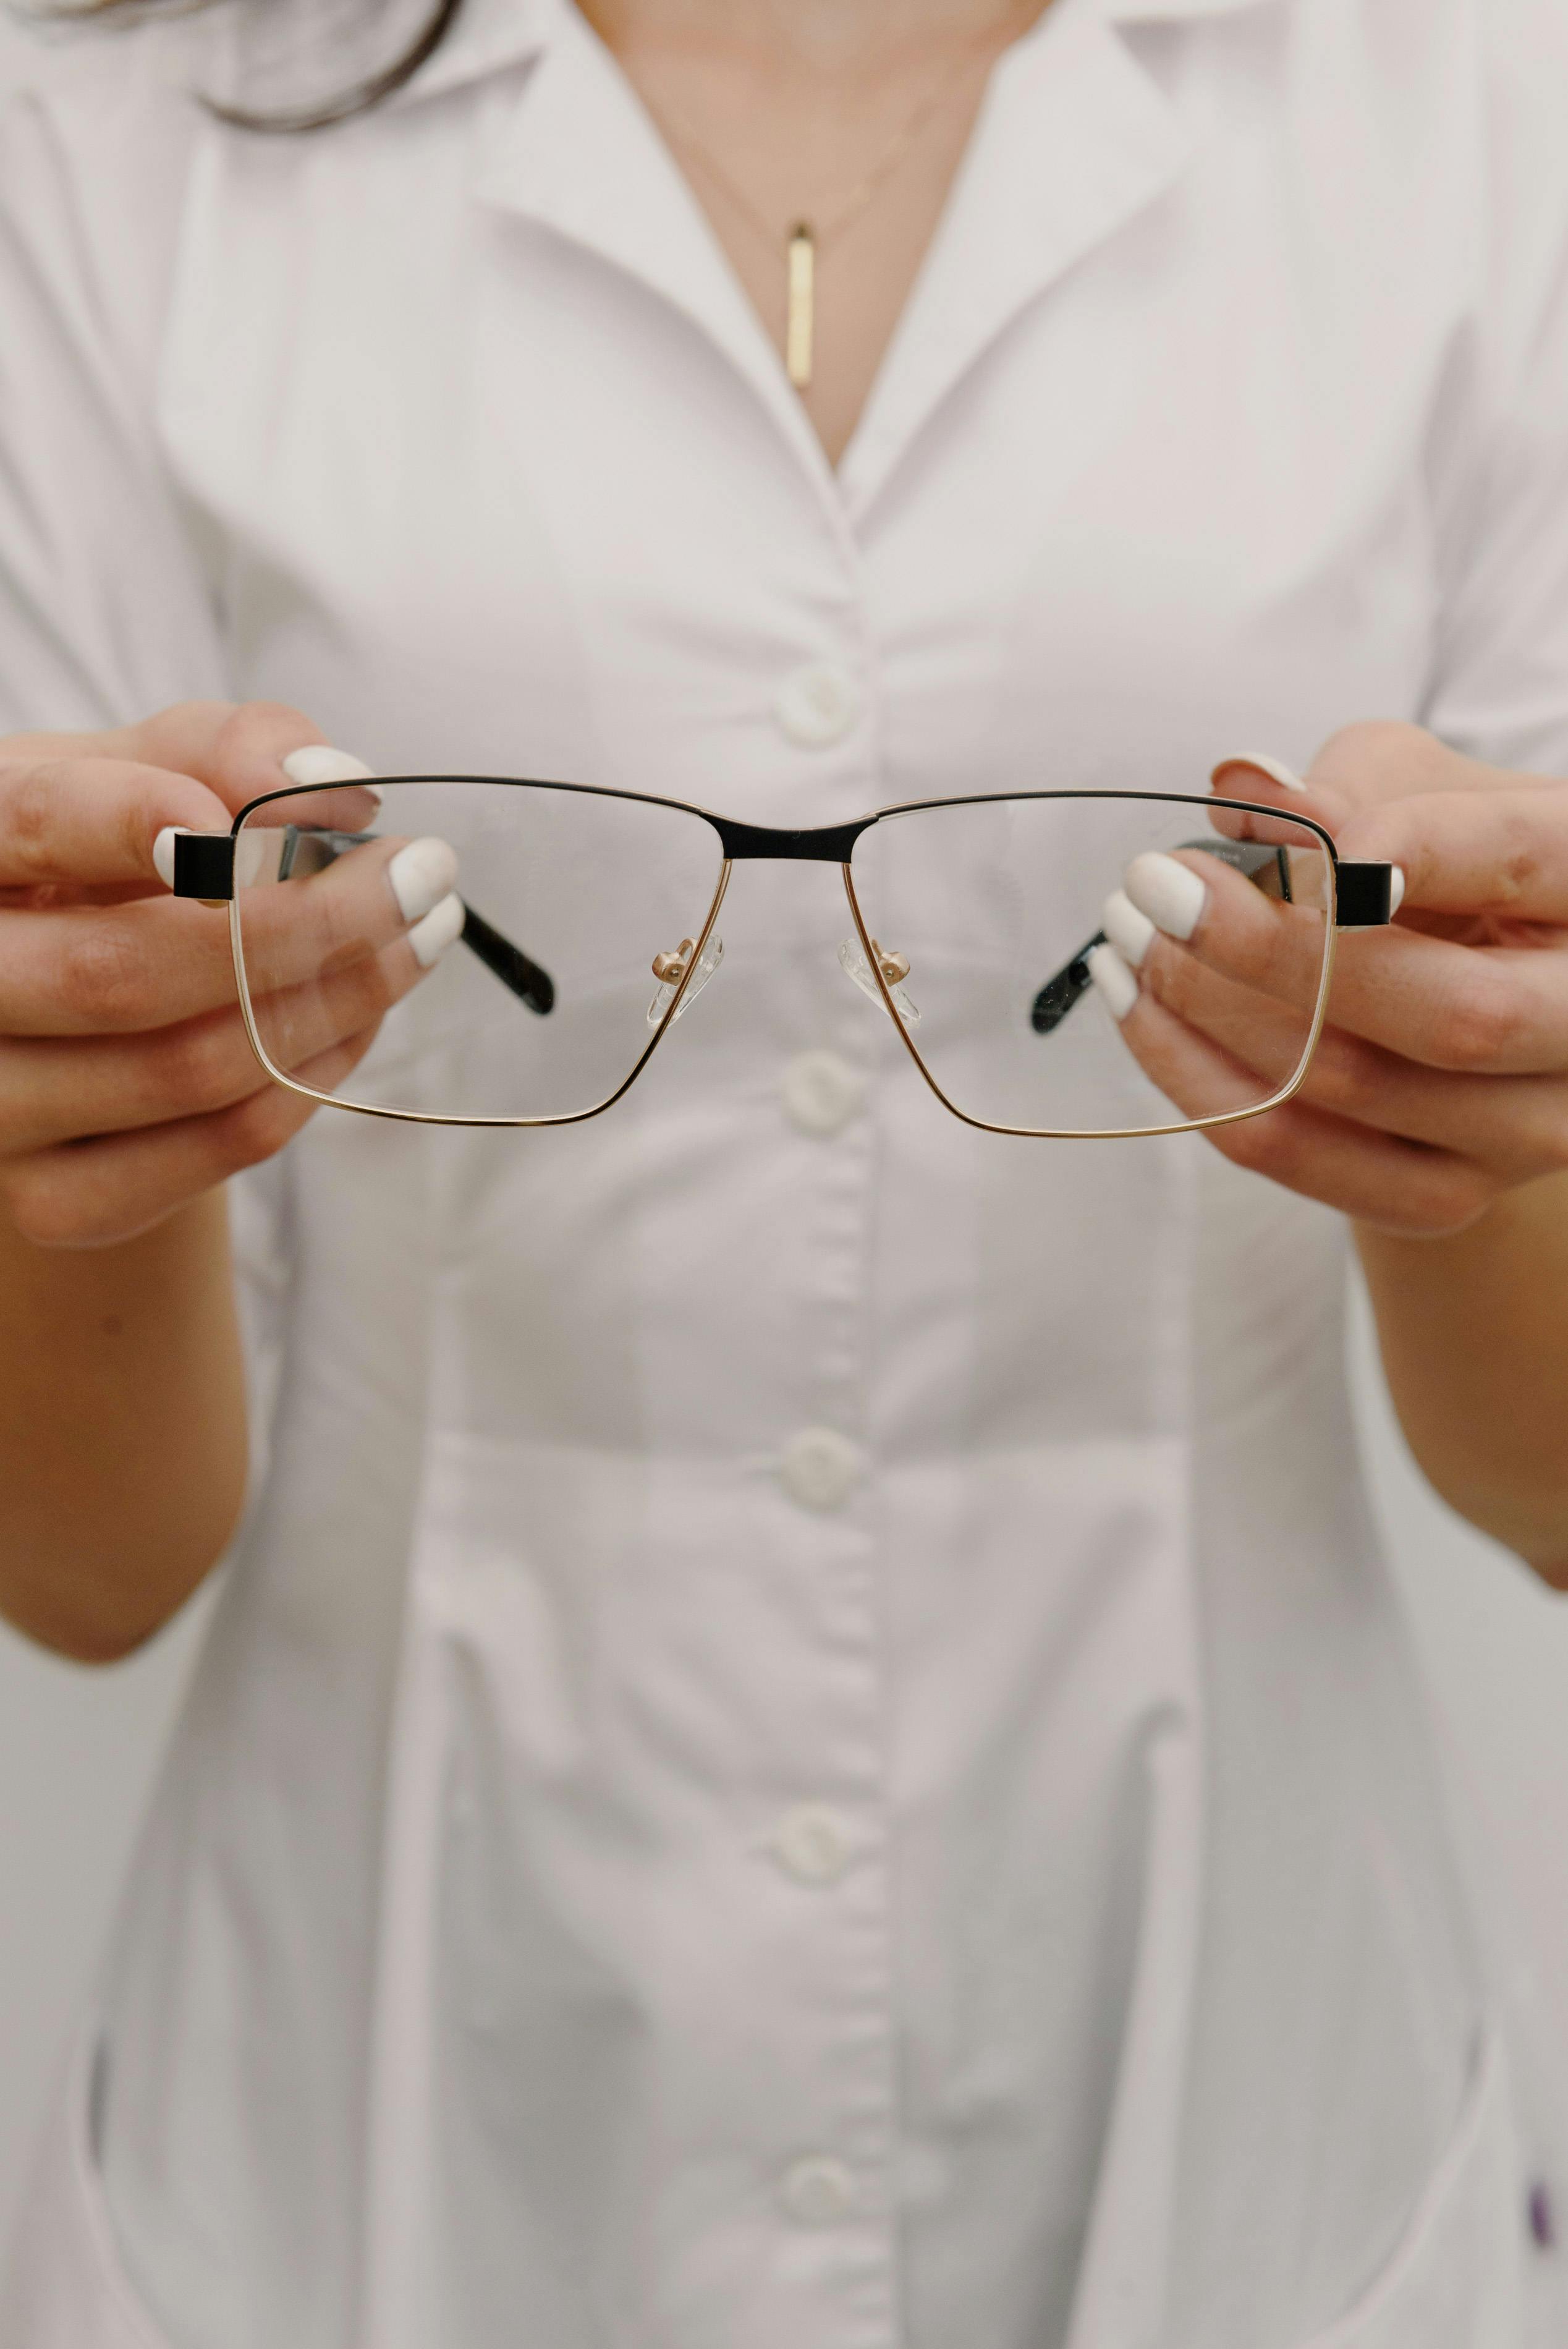 crop faceless female optometrist demonstrating eyeglasses